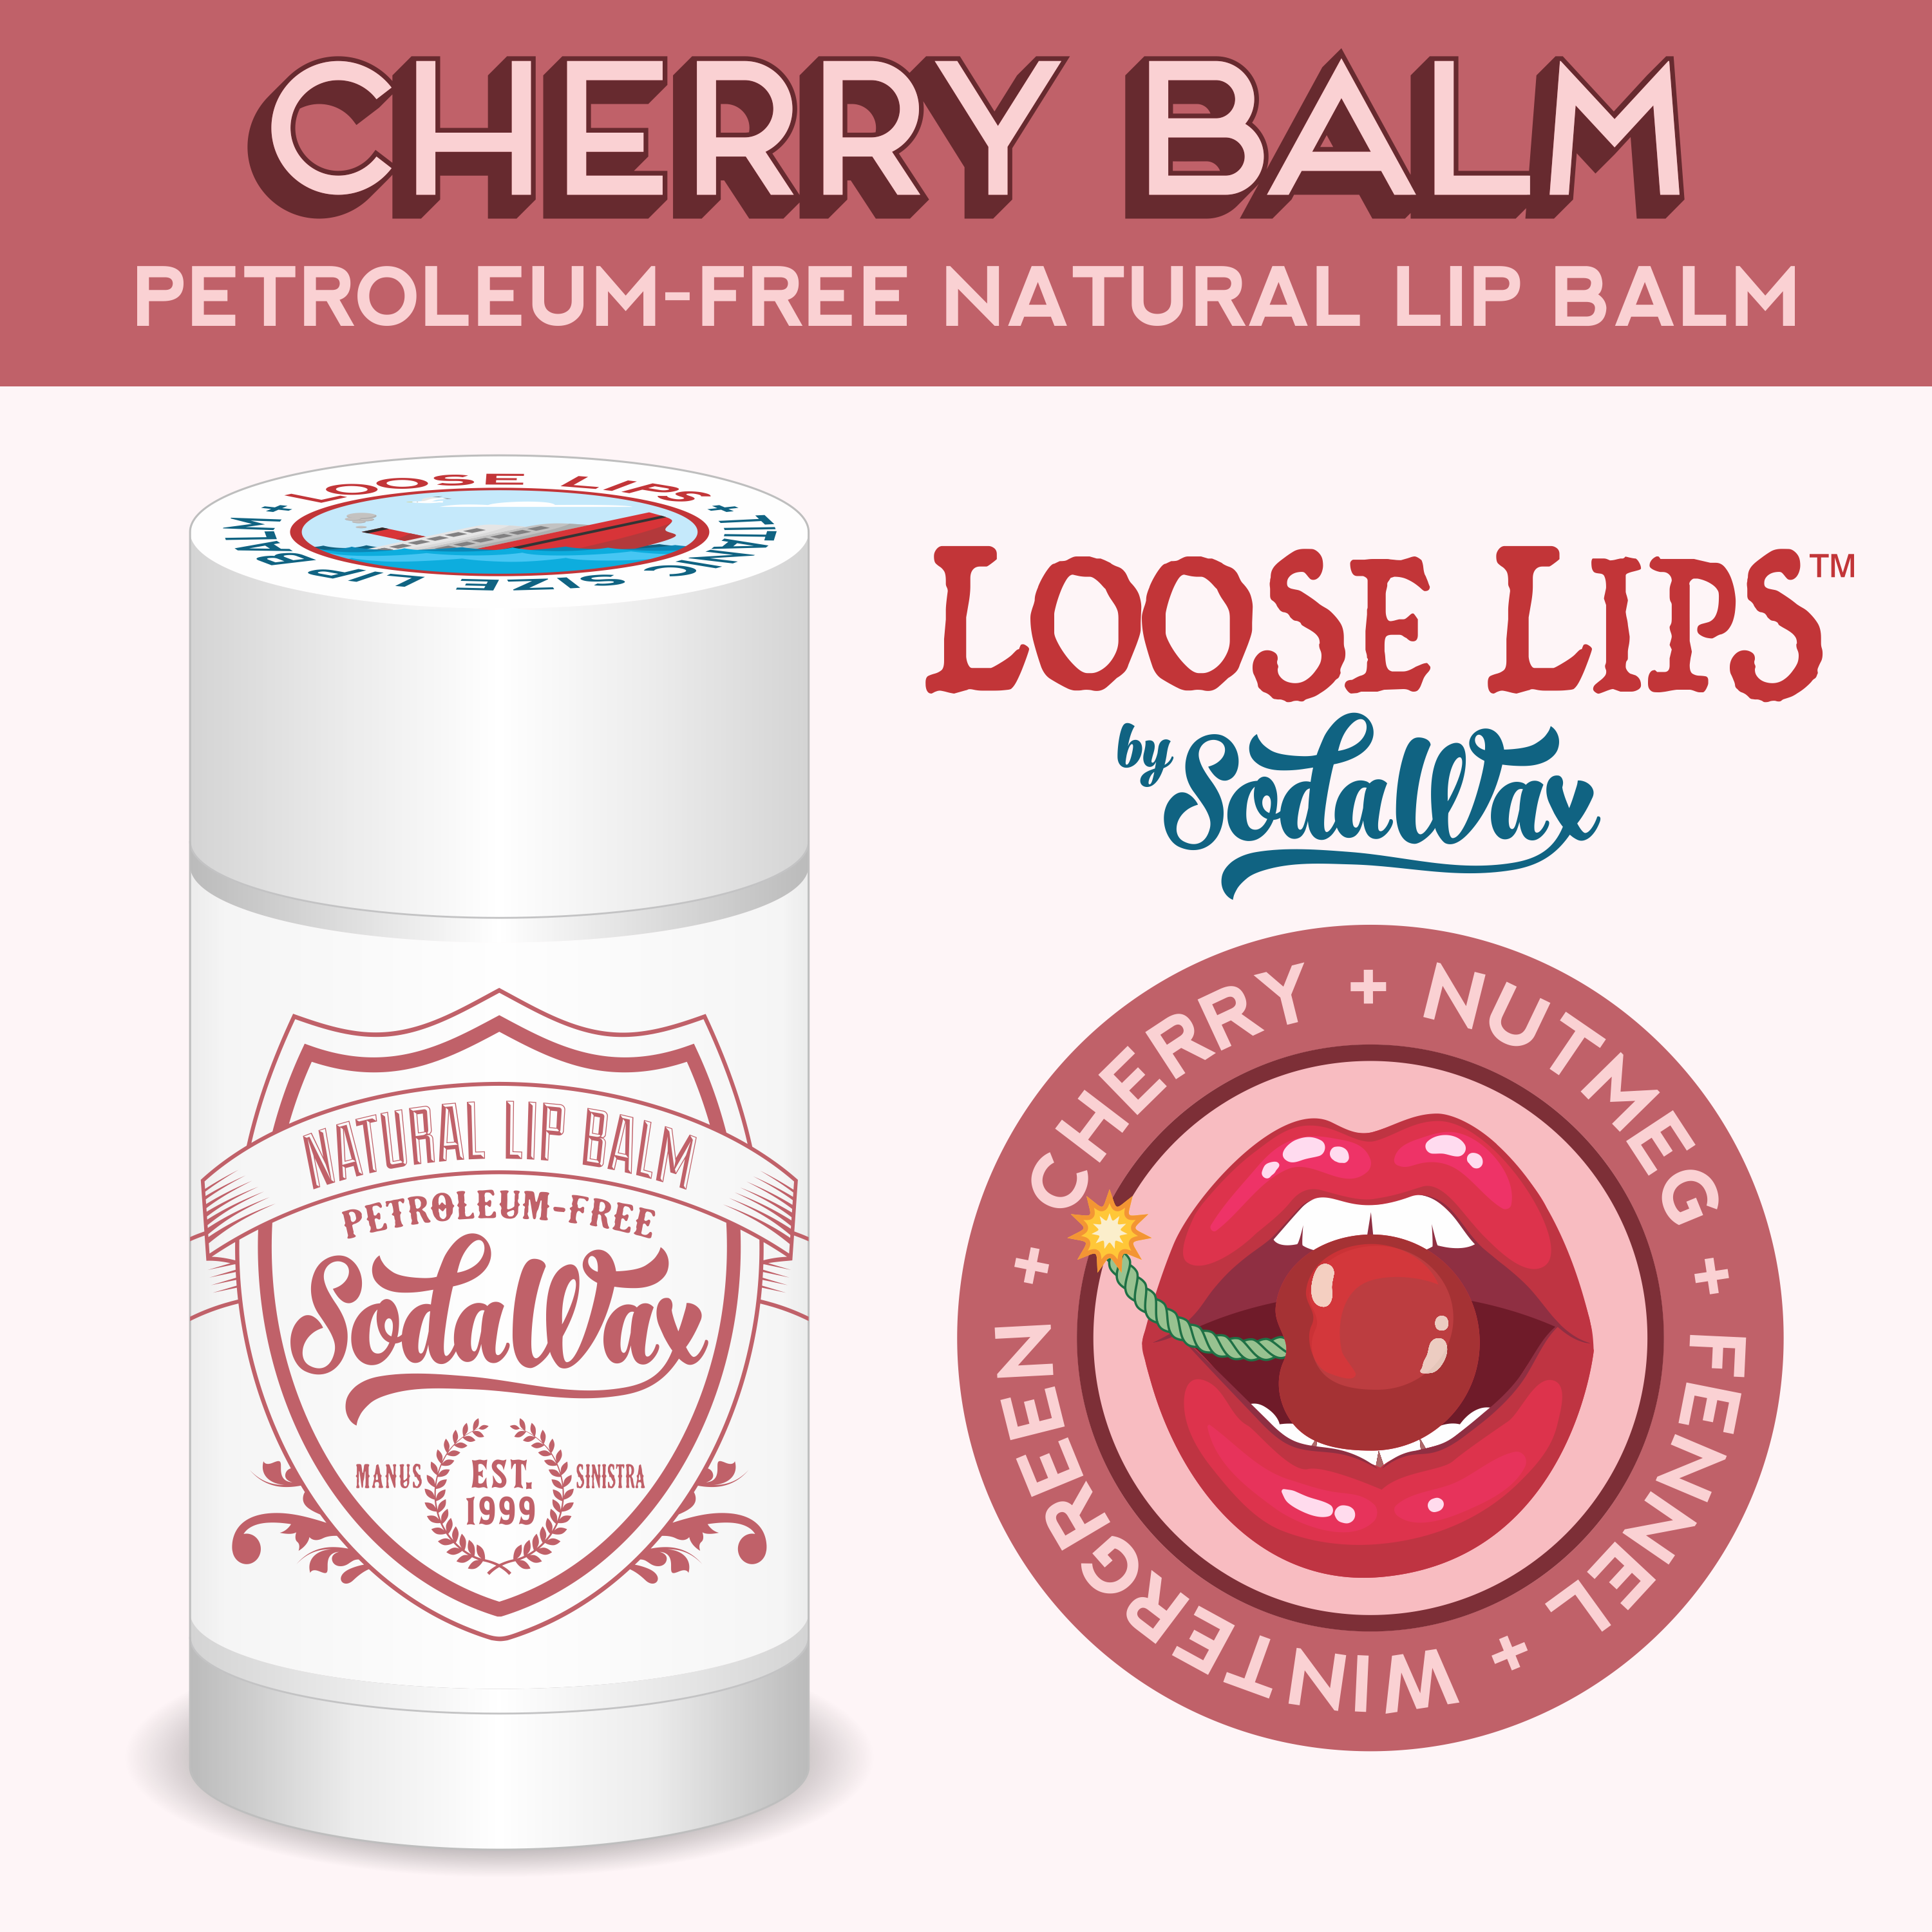 “Cherry Balm” Loose Lips™ Titanic Size Natural Lip Balm